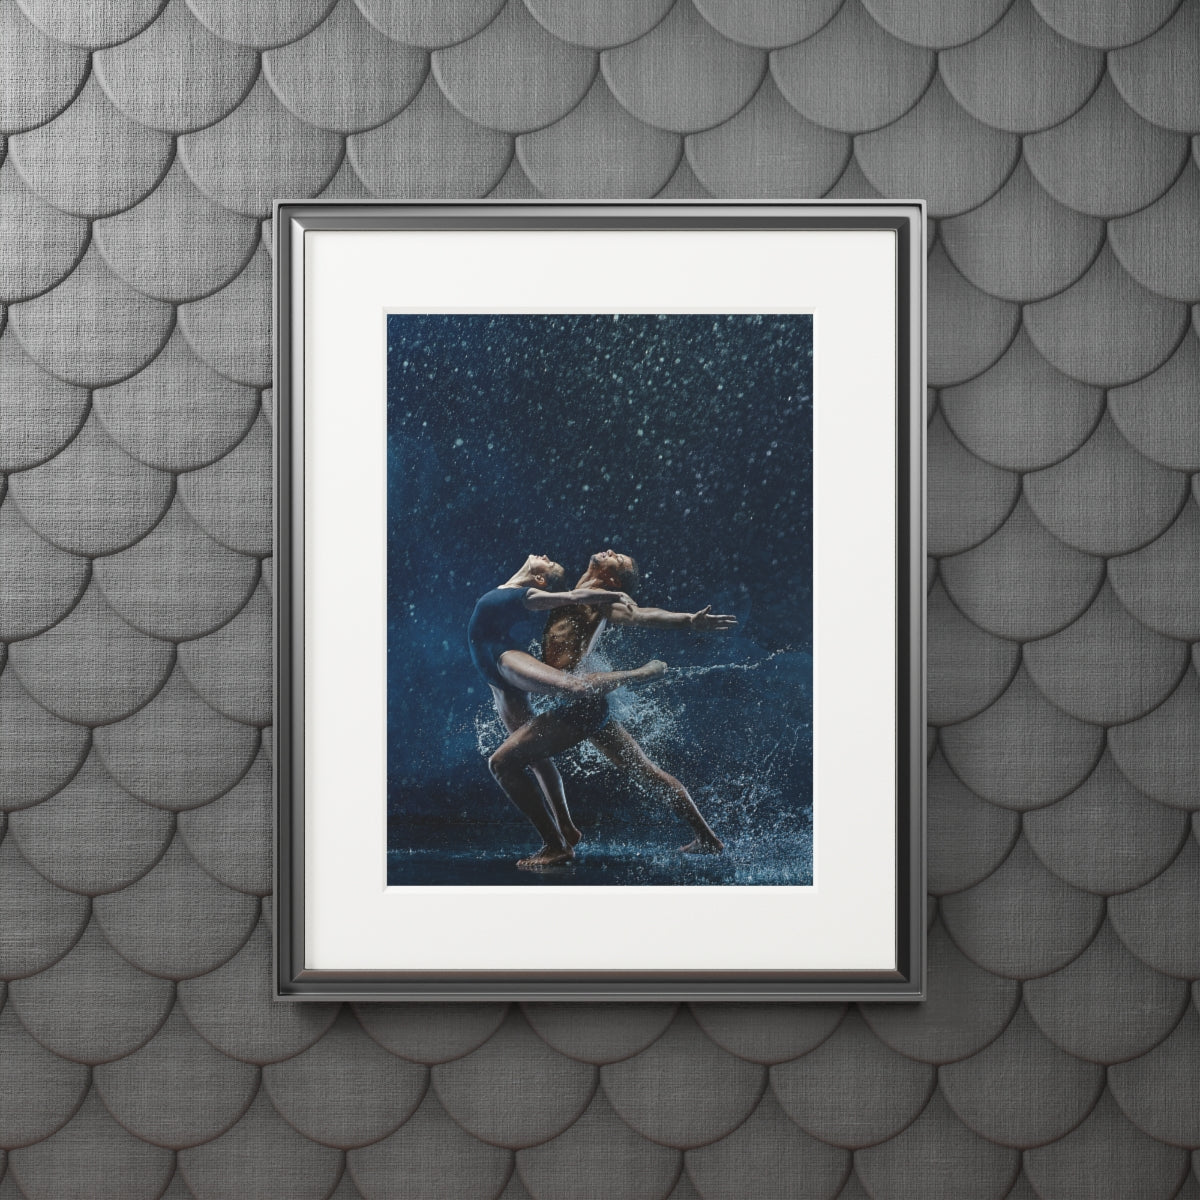 Dancing together in the rain - Fine Art Print (Passepartout Paper Frame)